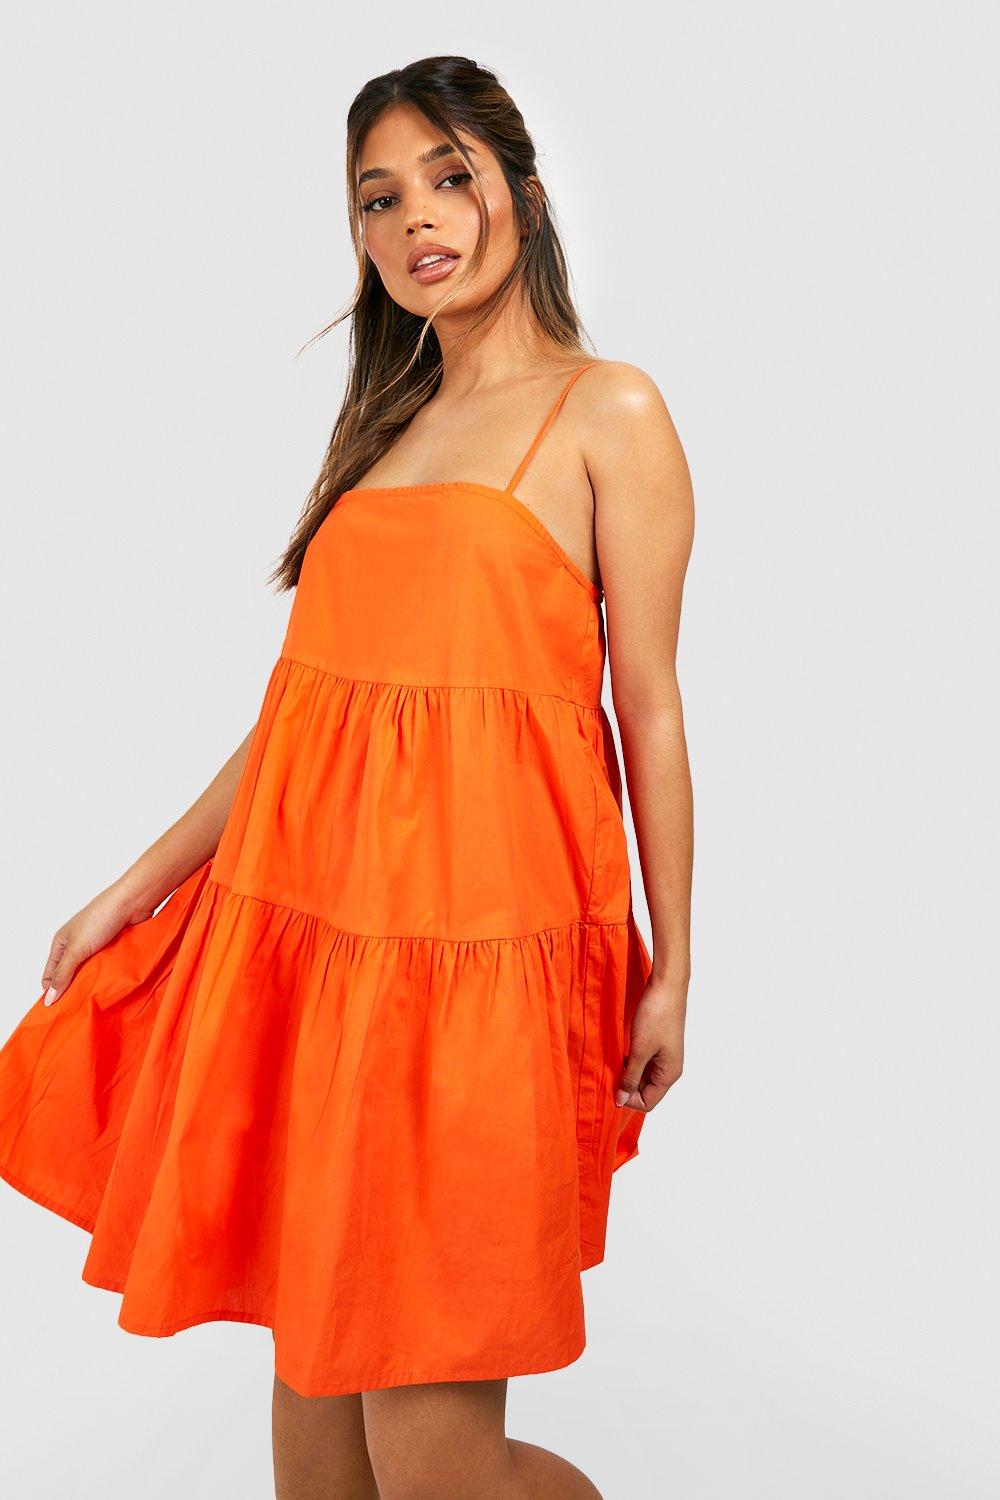 oranges dress